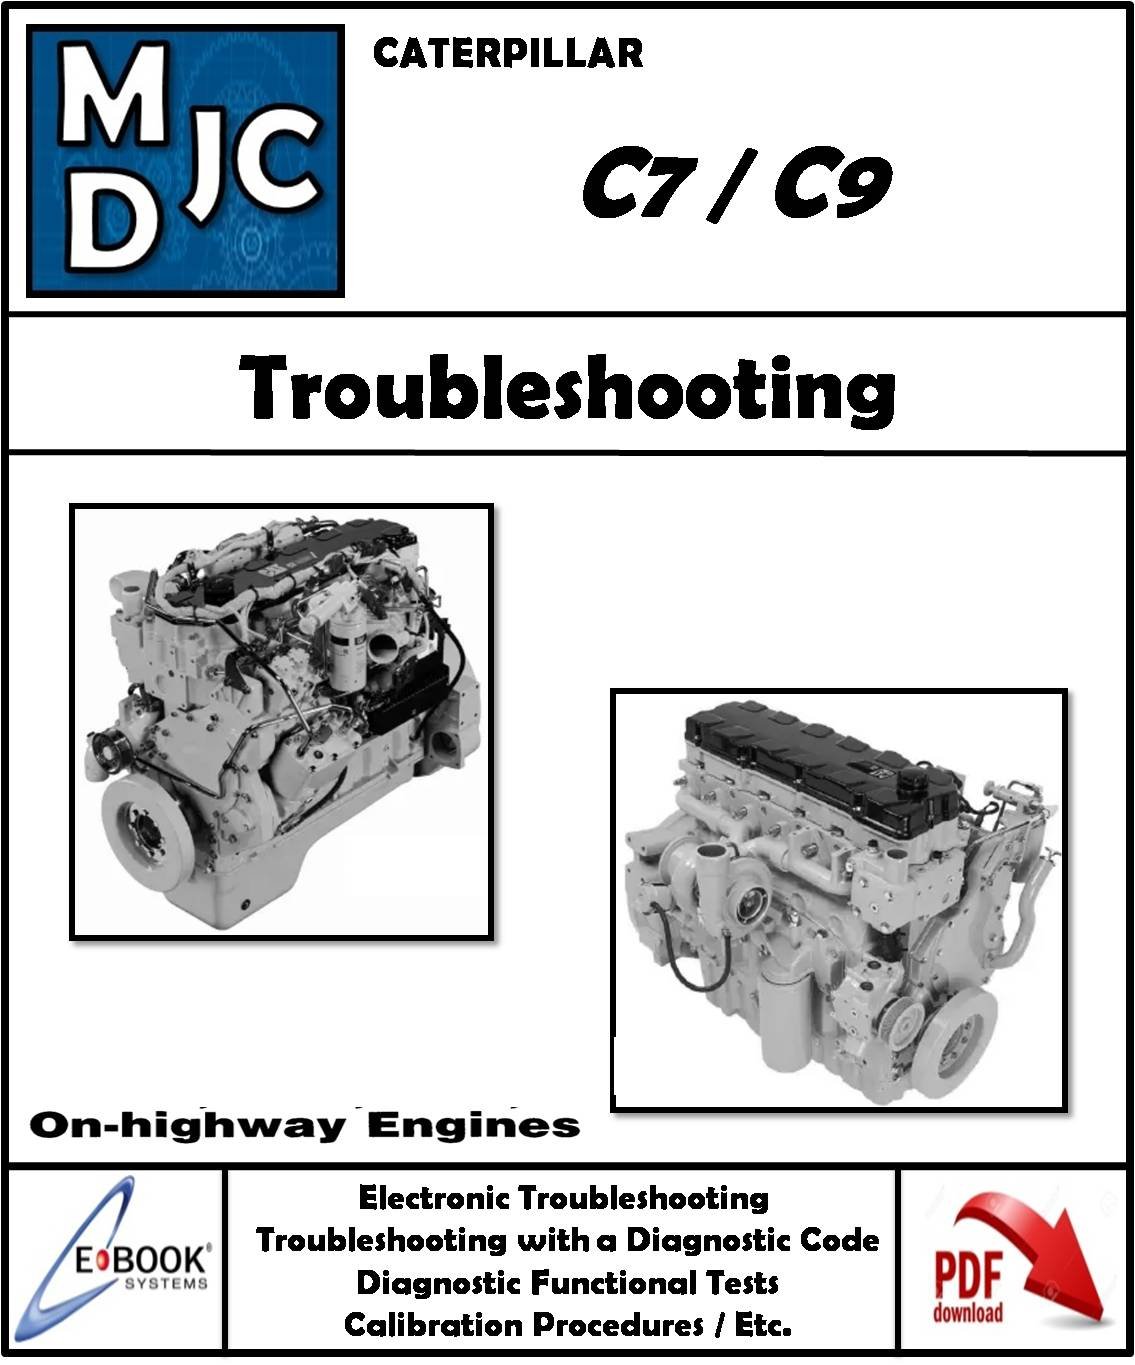 Manual de Fallas Motor Caterpillar C7 / C9 (On-highway Engines)